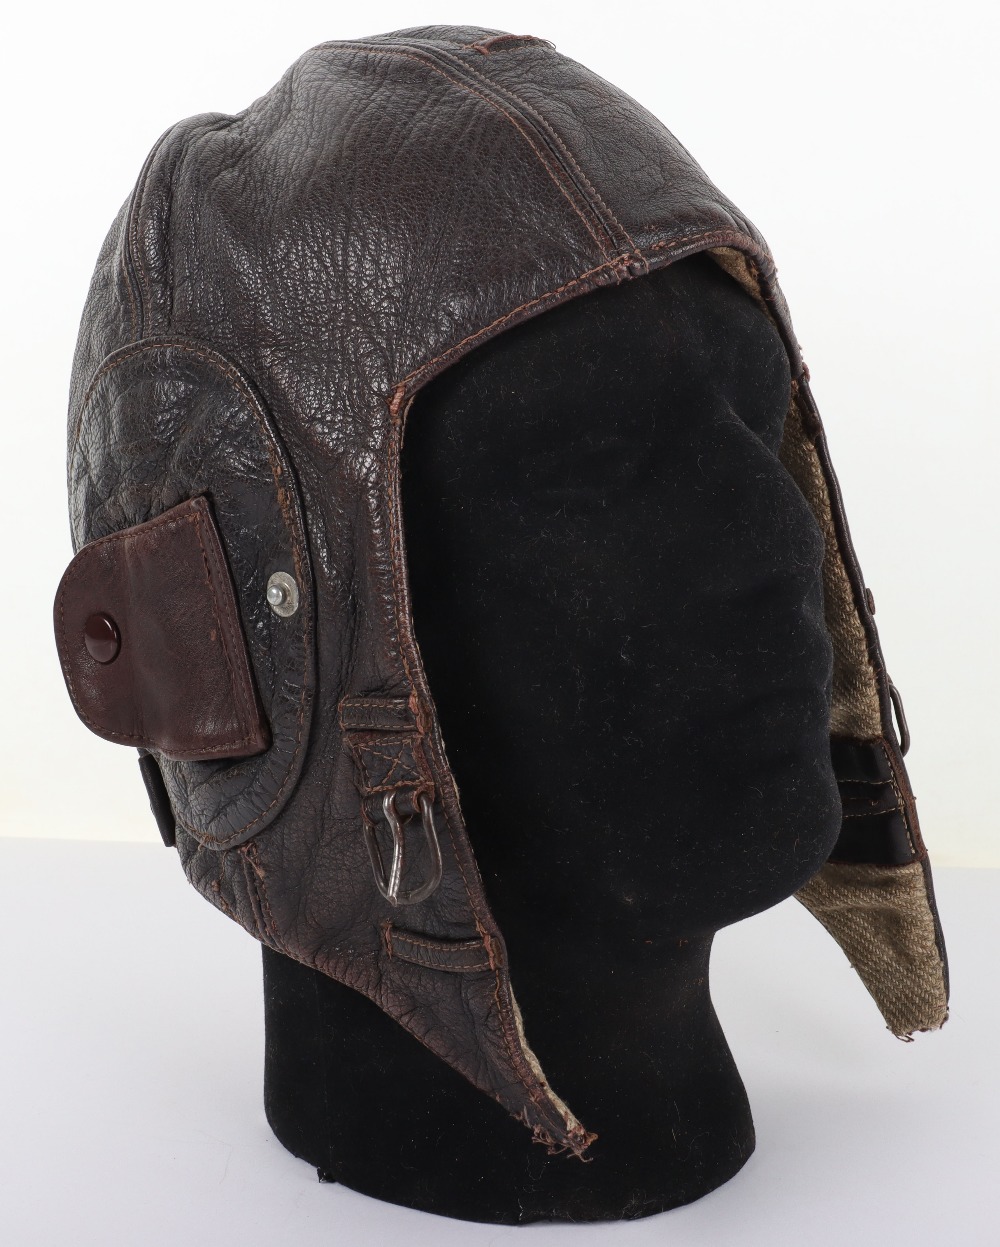 WW2 German Luftwaffe Leather Flying Helmet - Image 2 of 9